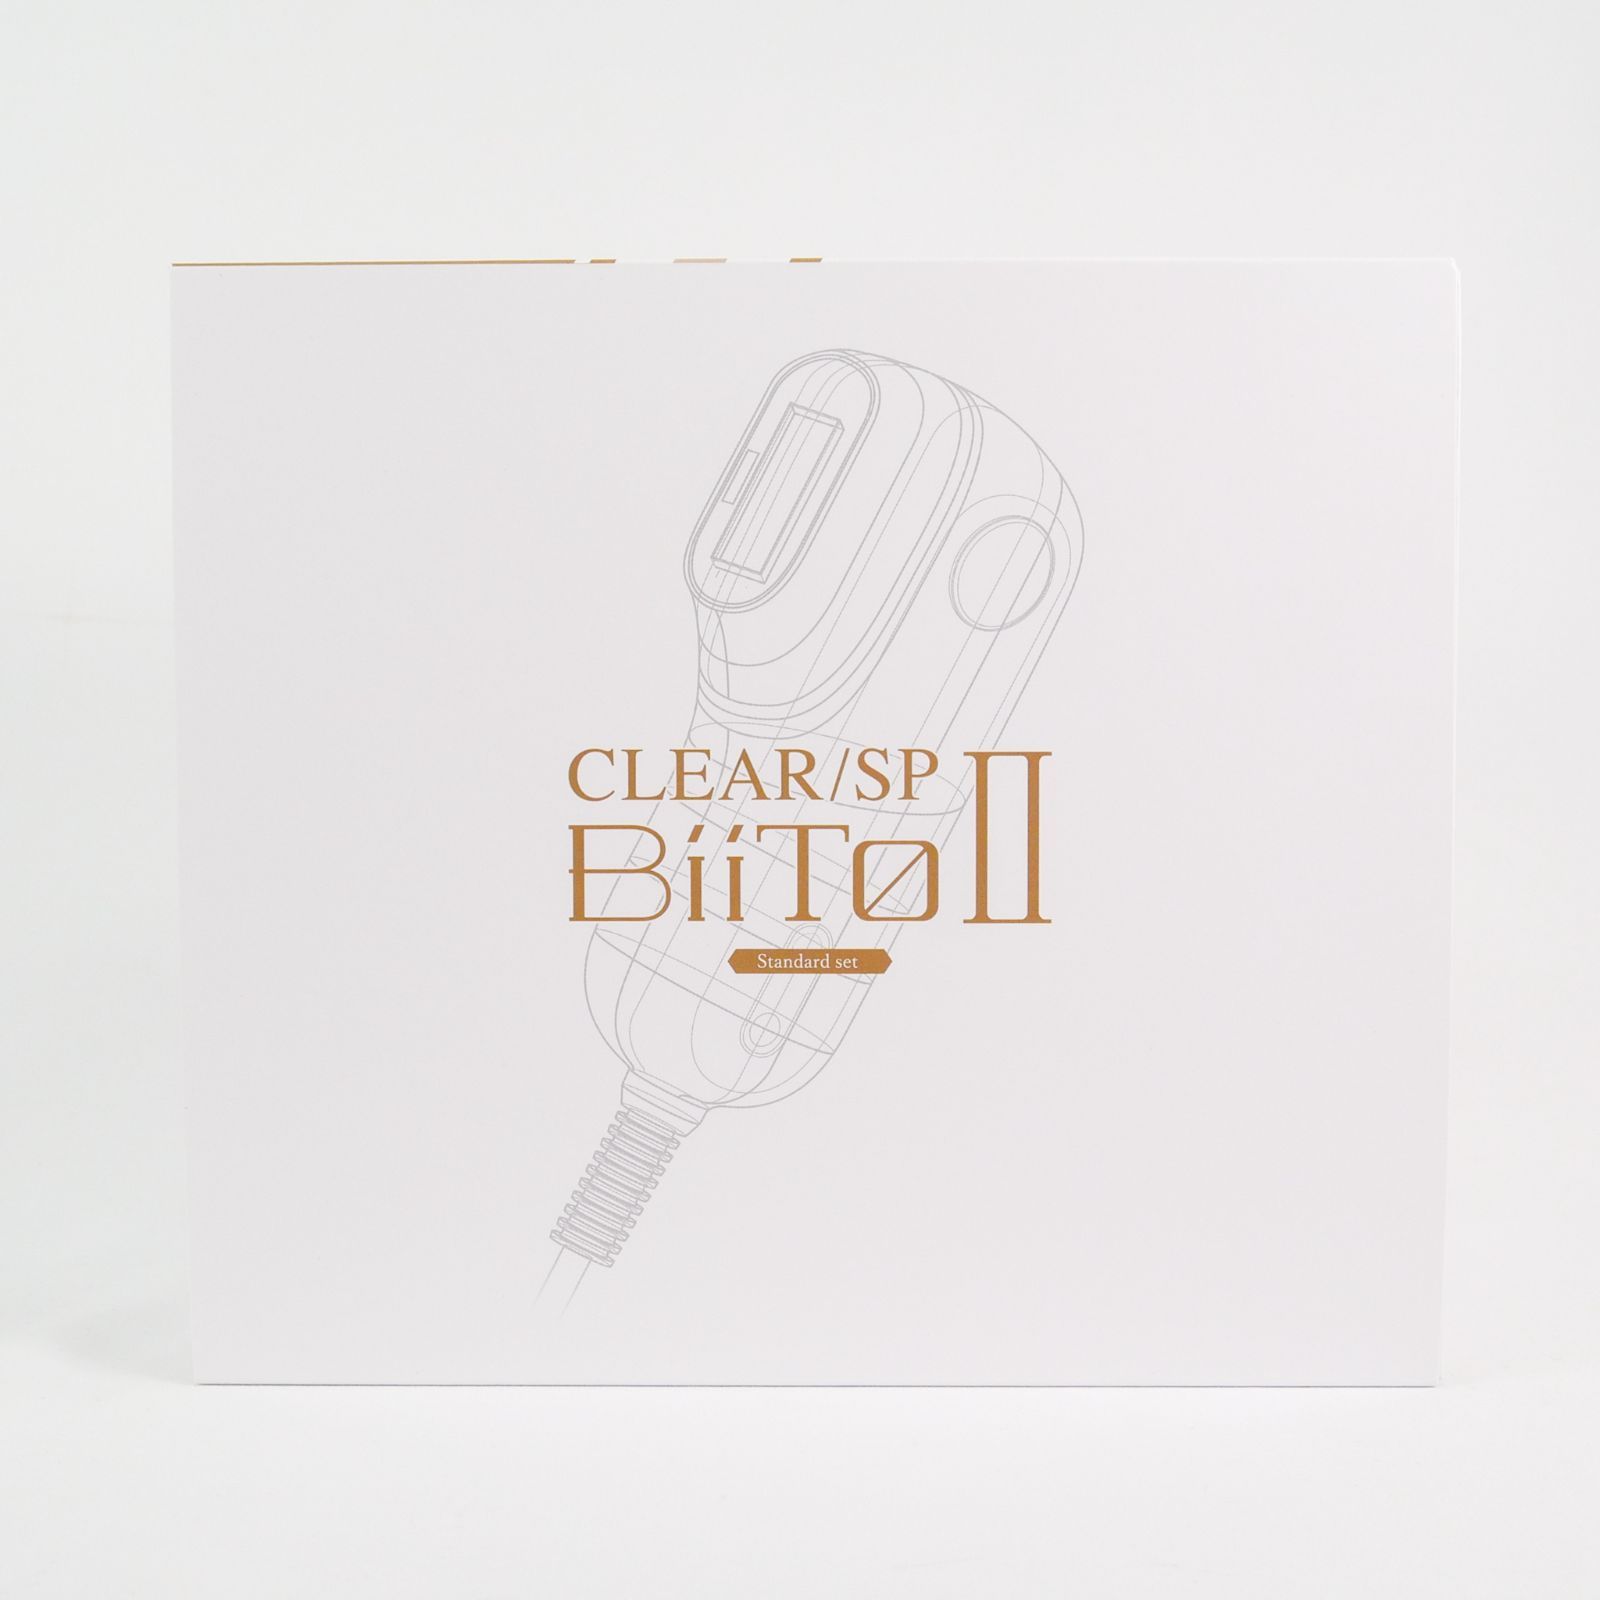 CLEAR/SP BiiTo2 ビートツー スタンダードセット 正規品 脱毛器 - メルカリ